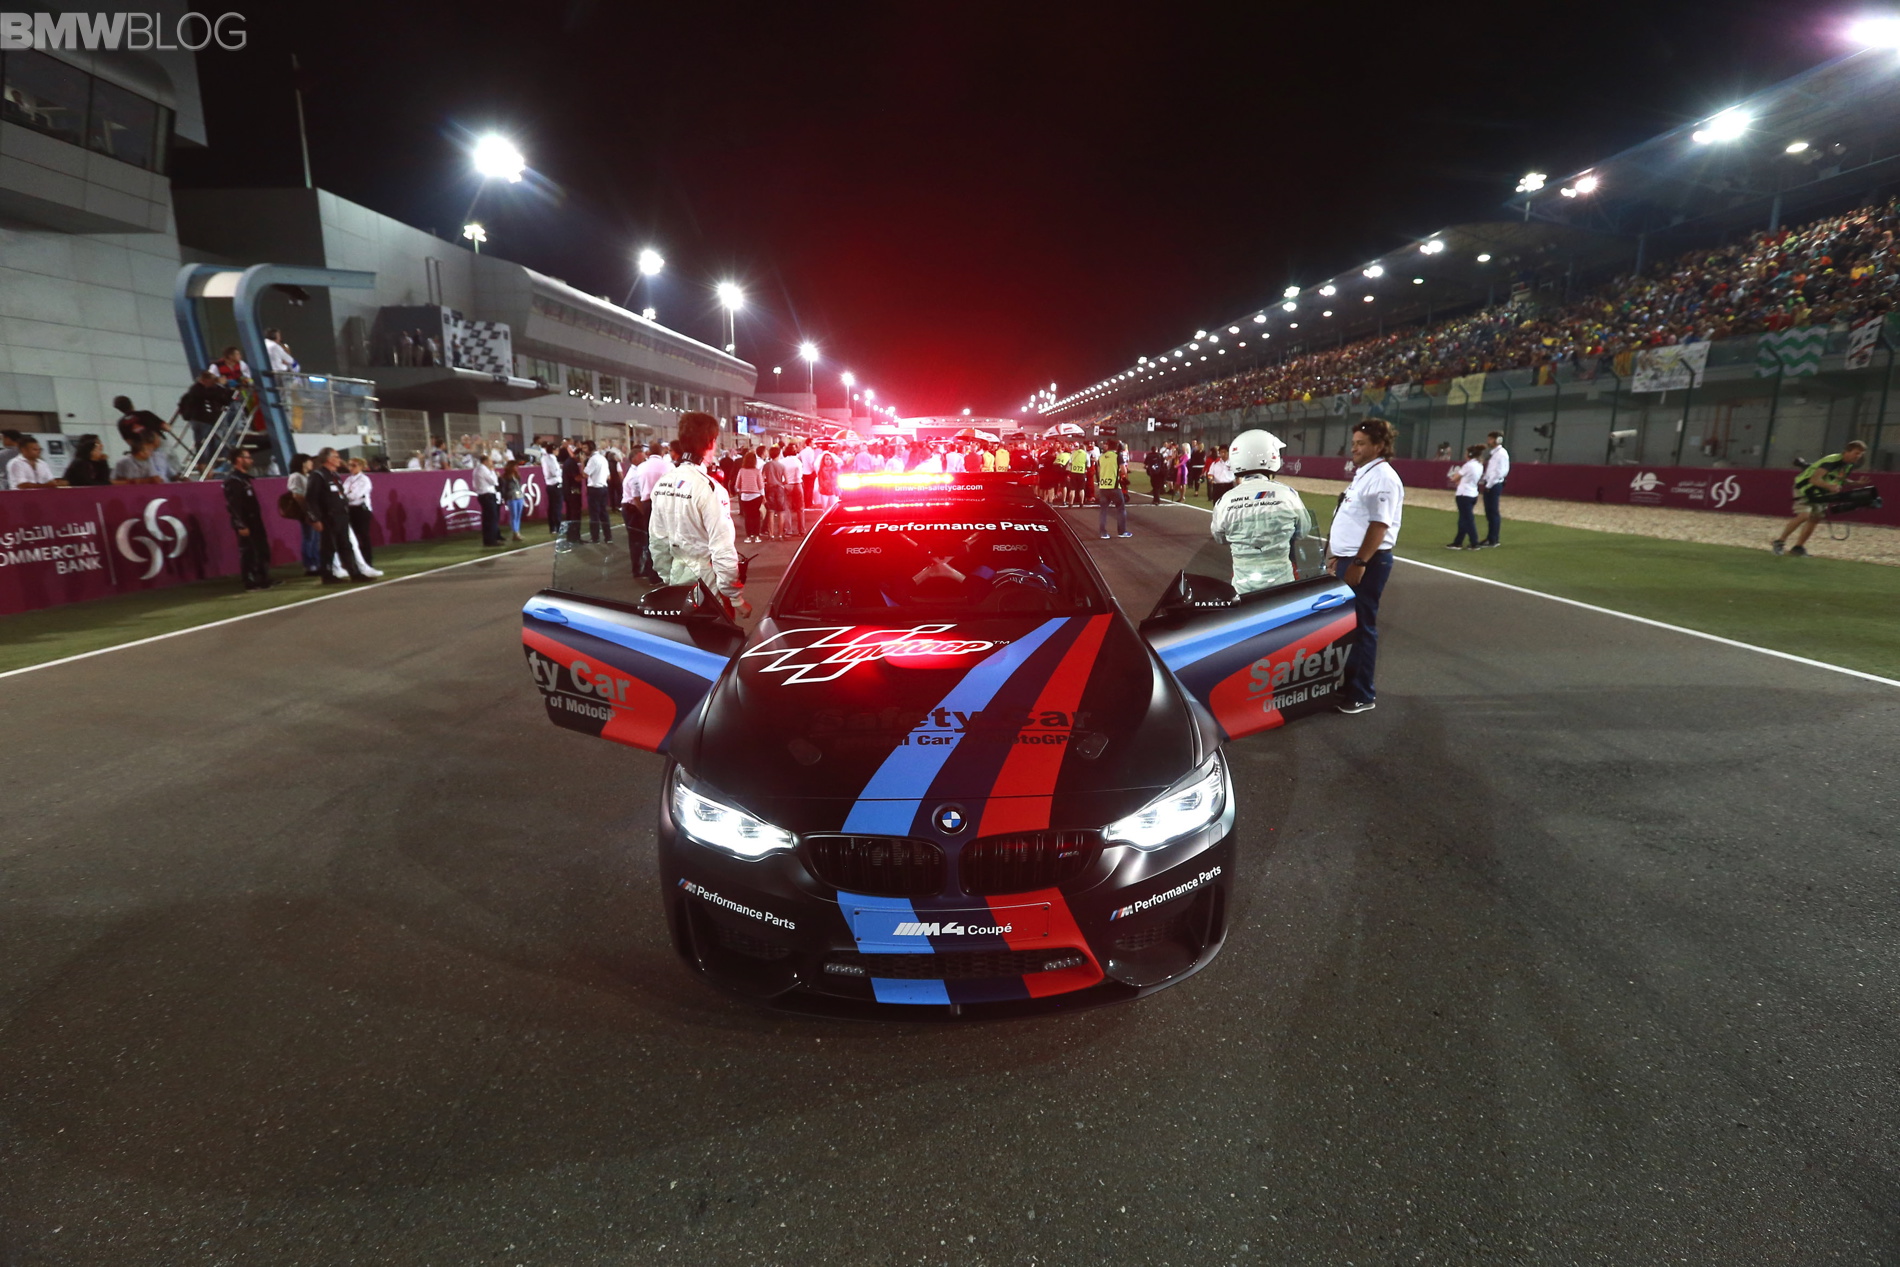 BMW M4 MotoGP Safety Car and BMW X5 M Medical Debut in Qatar